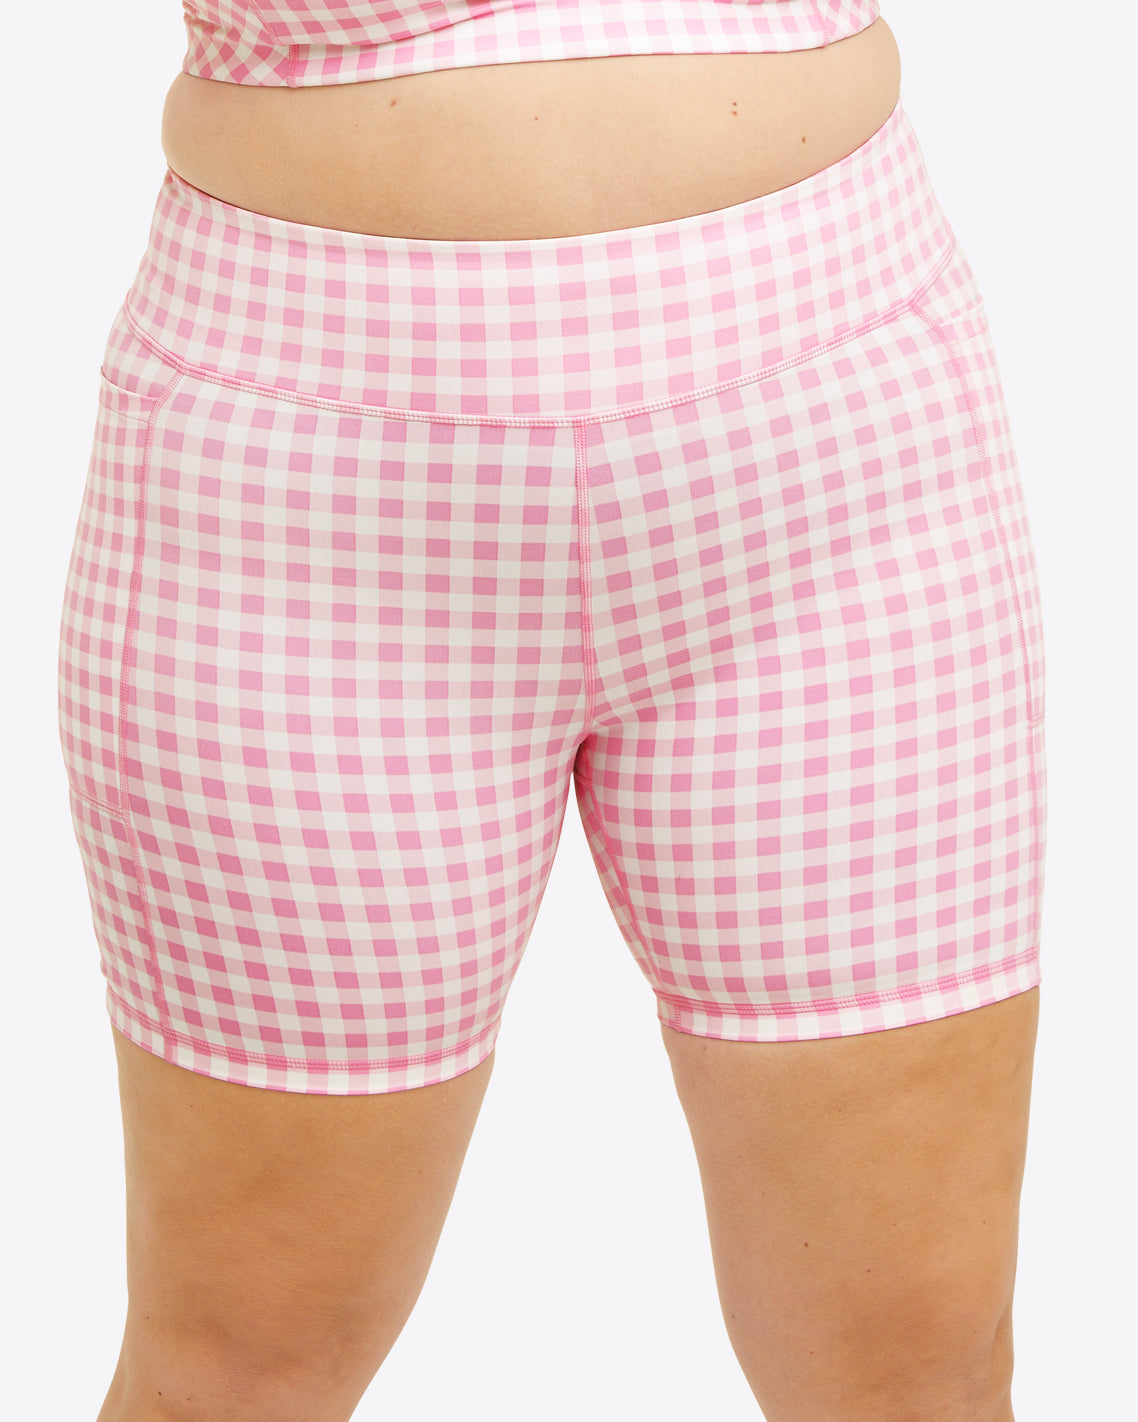 Bike Shorts in Pink Gingham